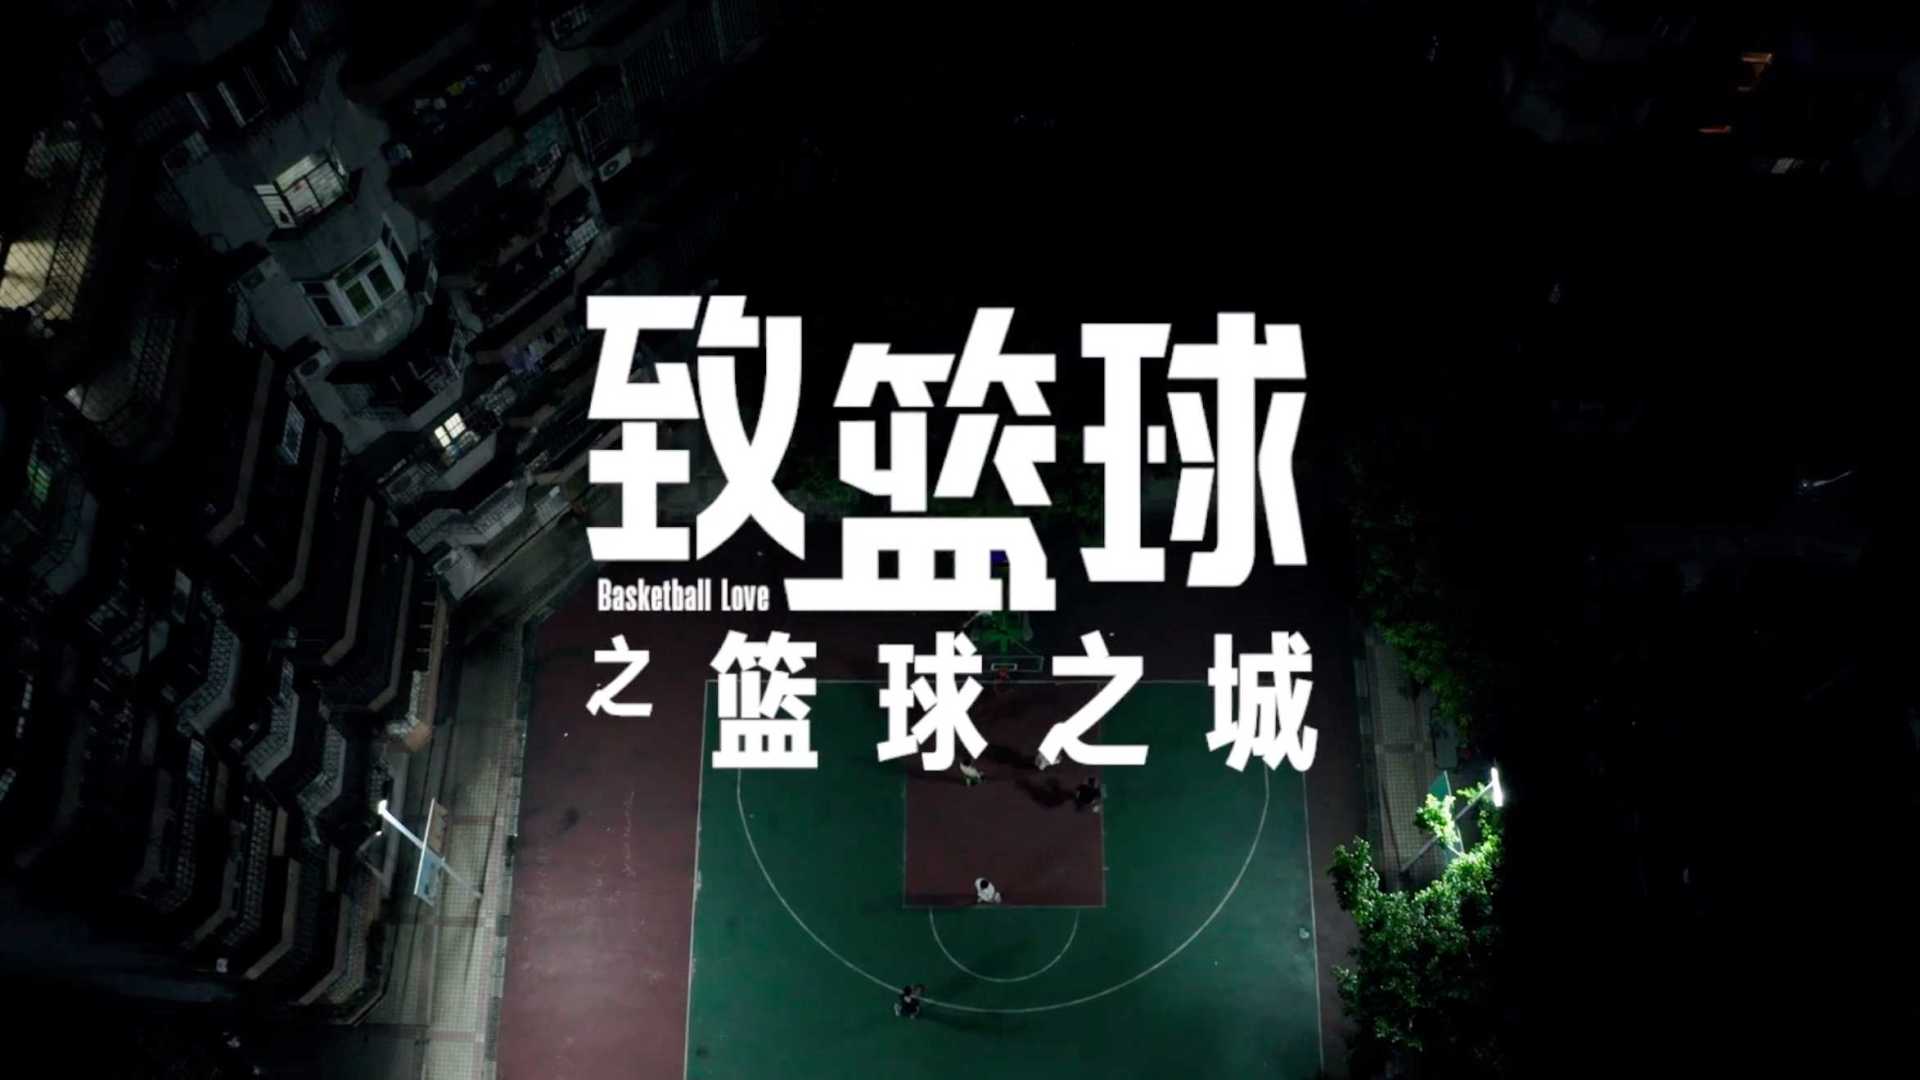 NBA中国 -《致篮球:篮球之城》